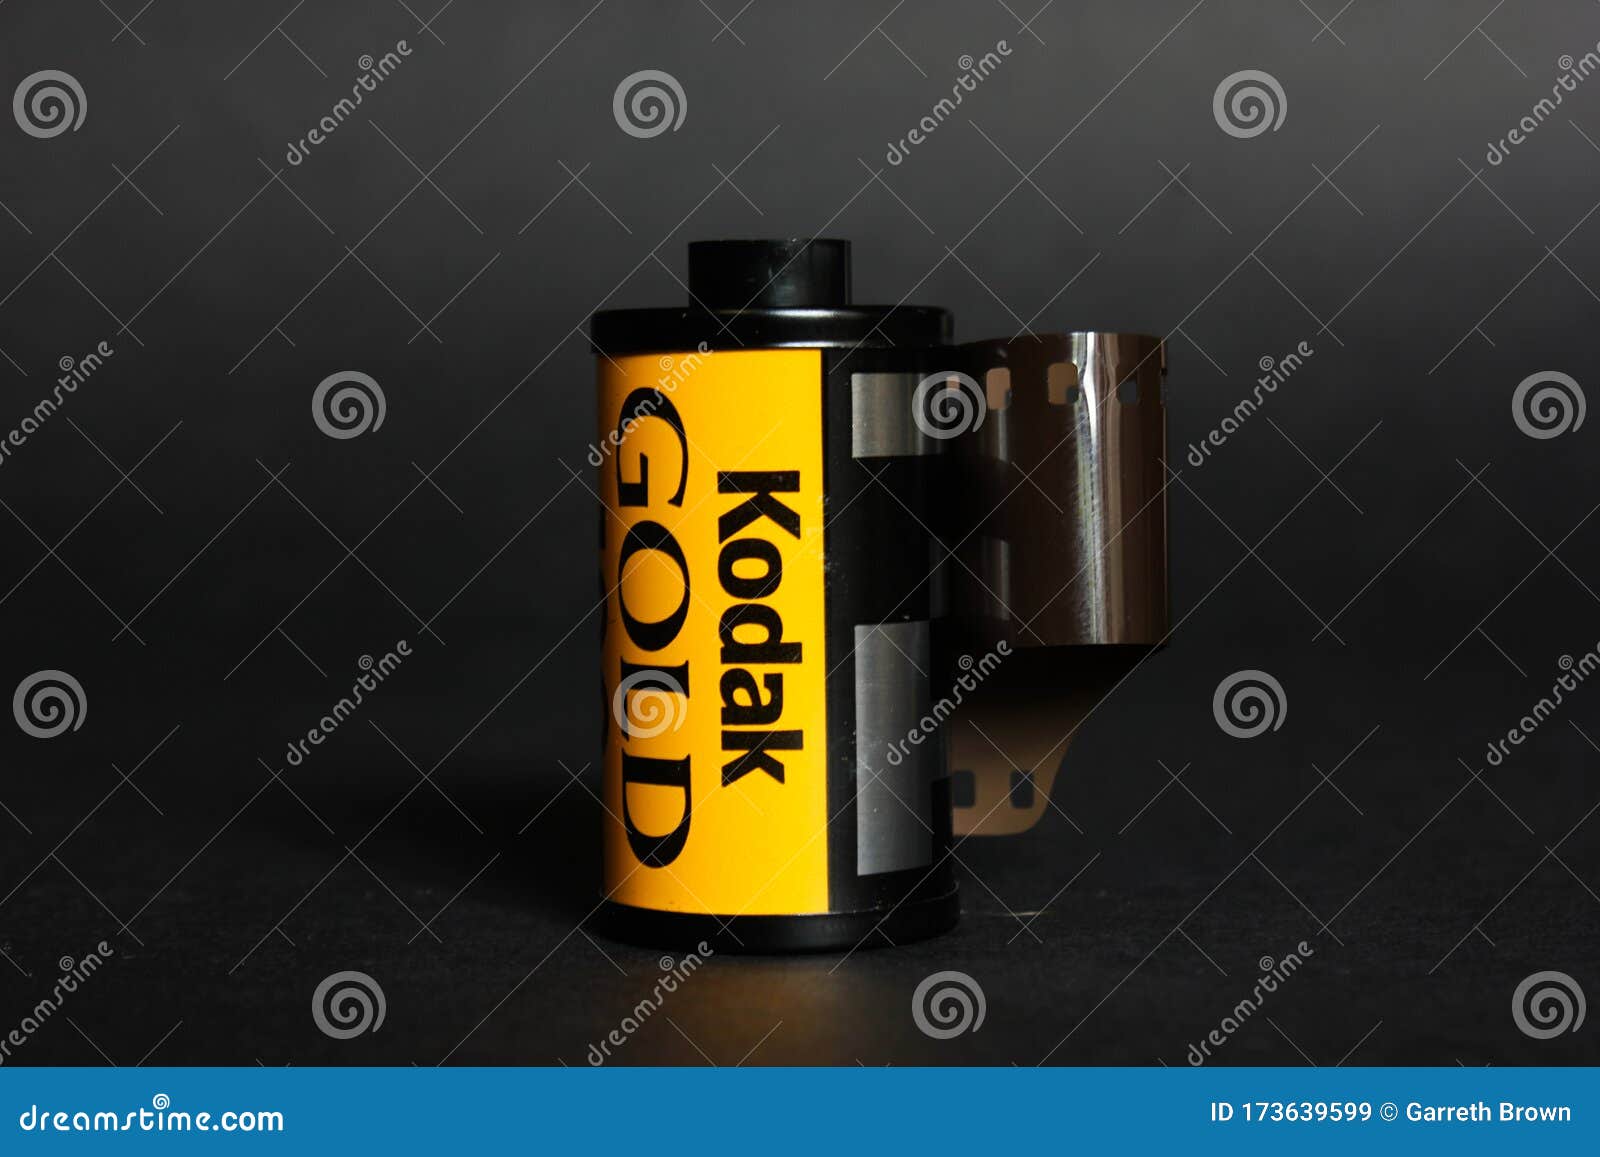 A Kodak Gold Iso 100 35mm Film Roll. Editorial Stock Image - Image of  illustrative, black: 173639599